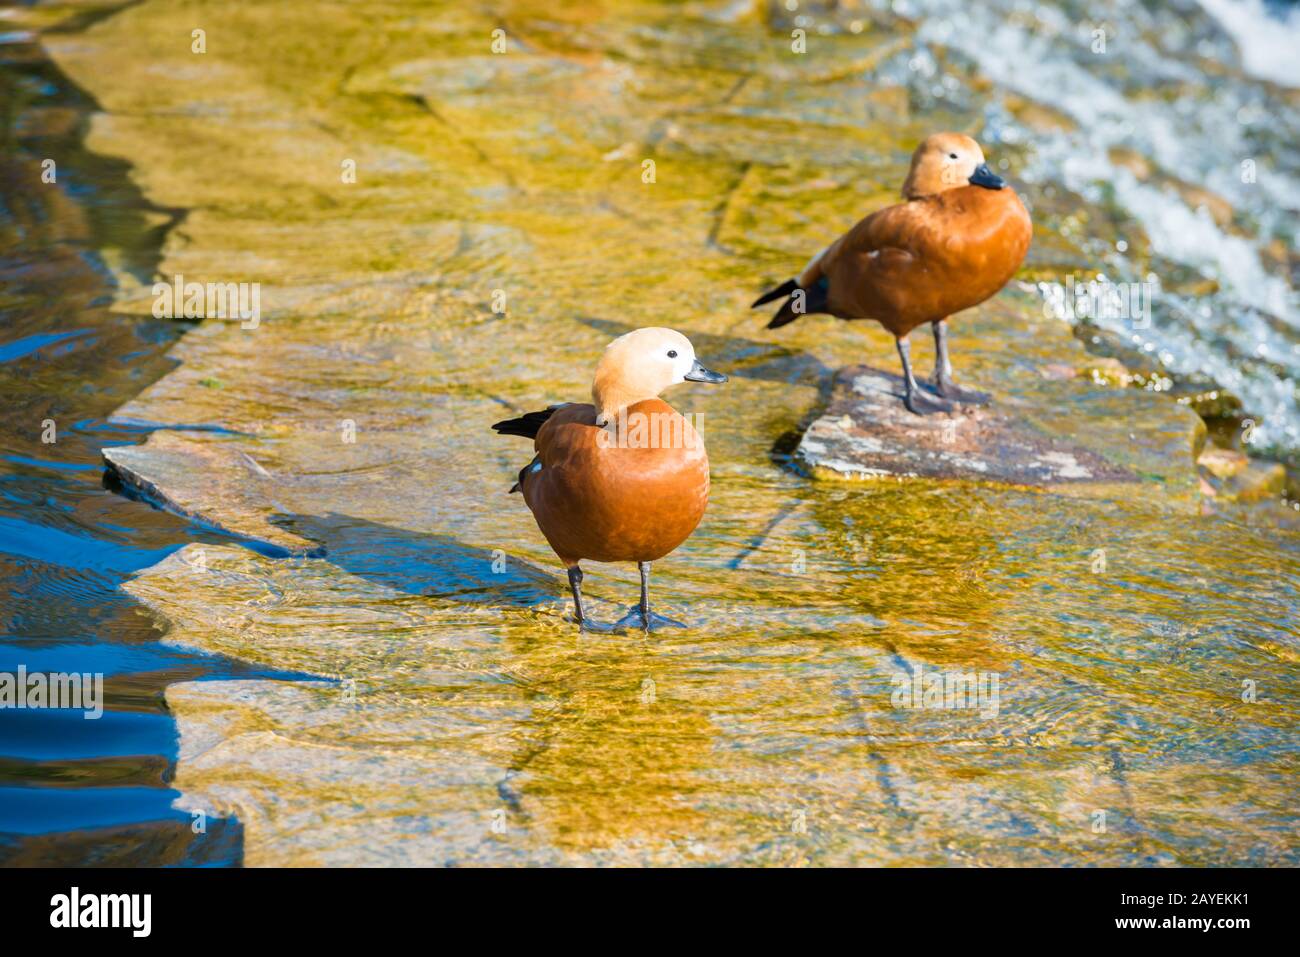 Ducks on a pond Stock Photo